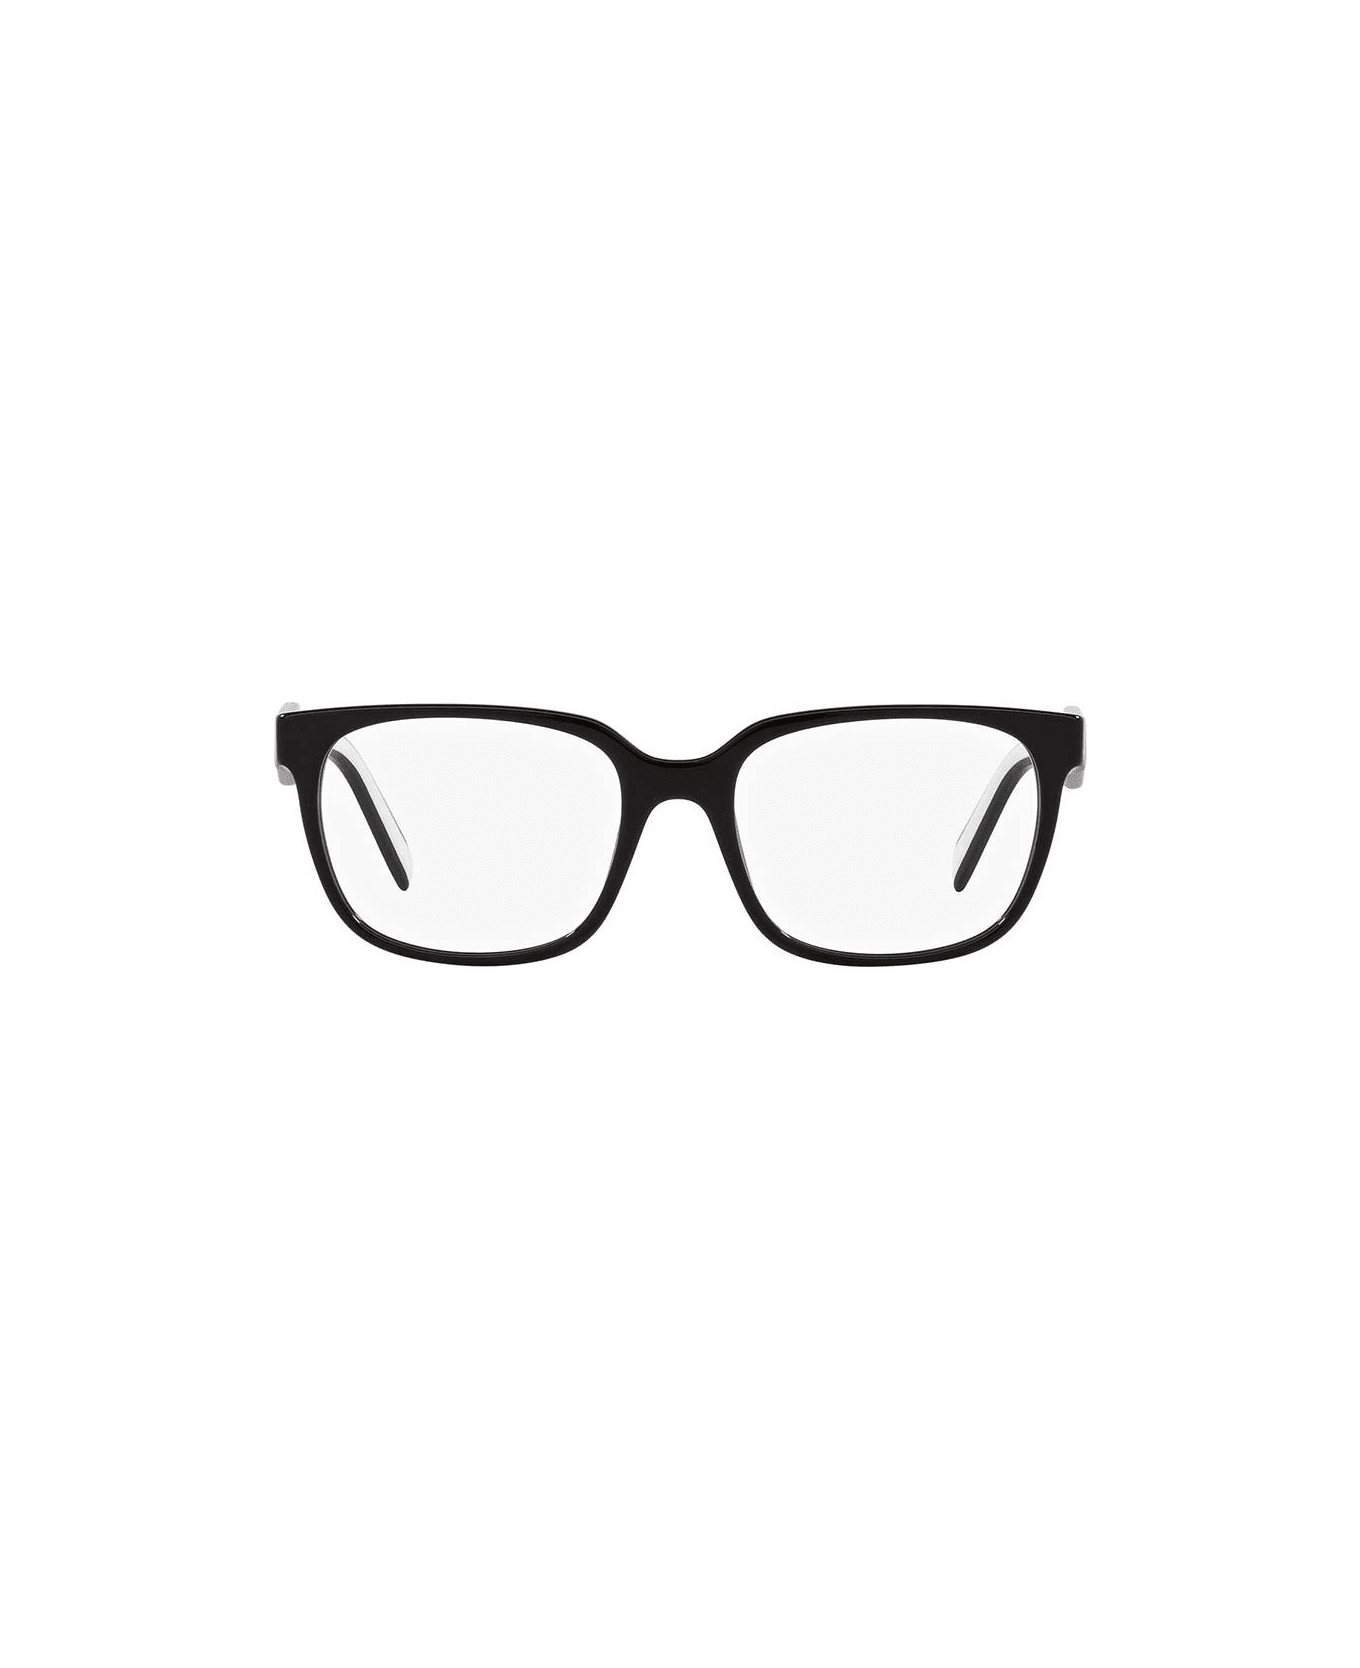 Prada Eyewear Glasses - 1AB1O1